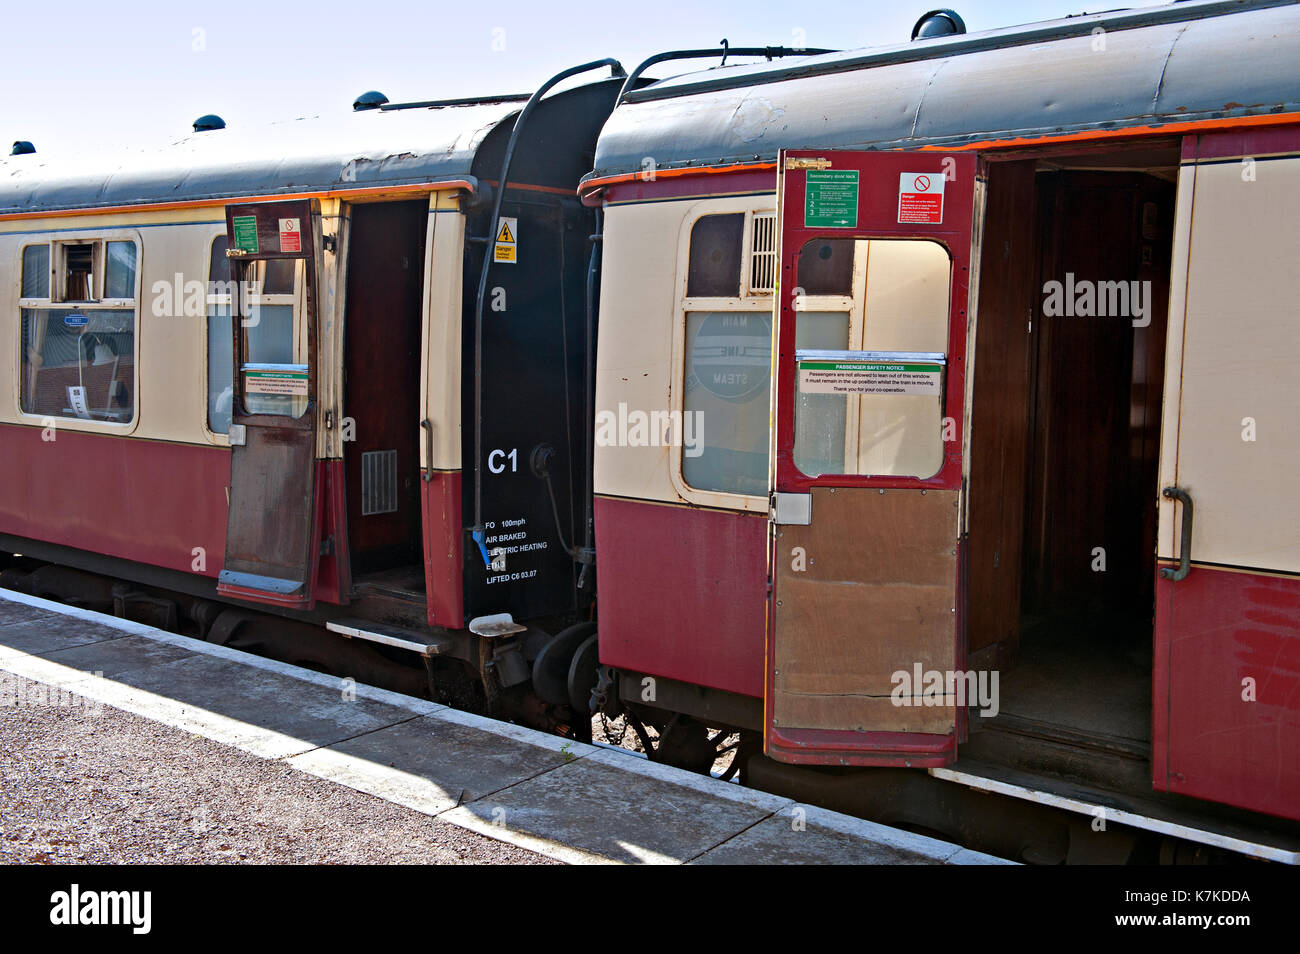 Opening doors on vintage Mark One railway carriage Stock Photo